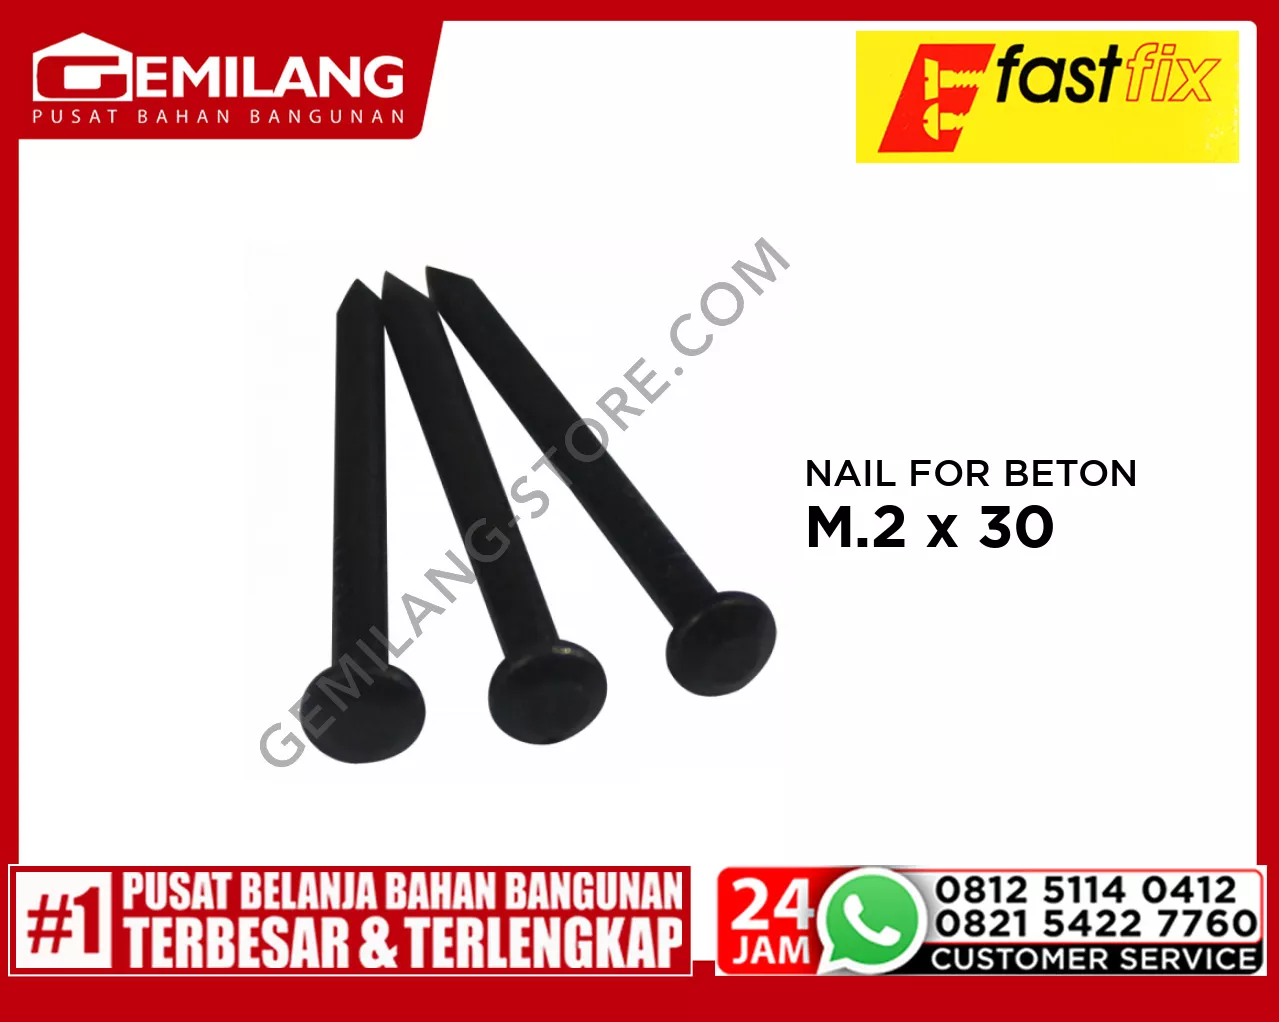 NAIL FOR BETON BLACK M.2 x 30 10pc